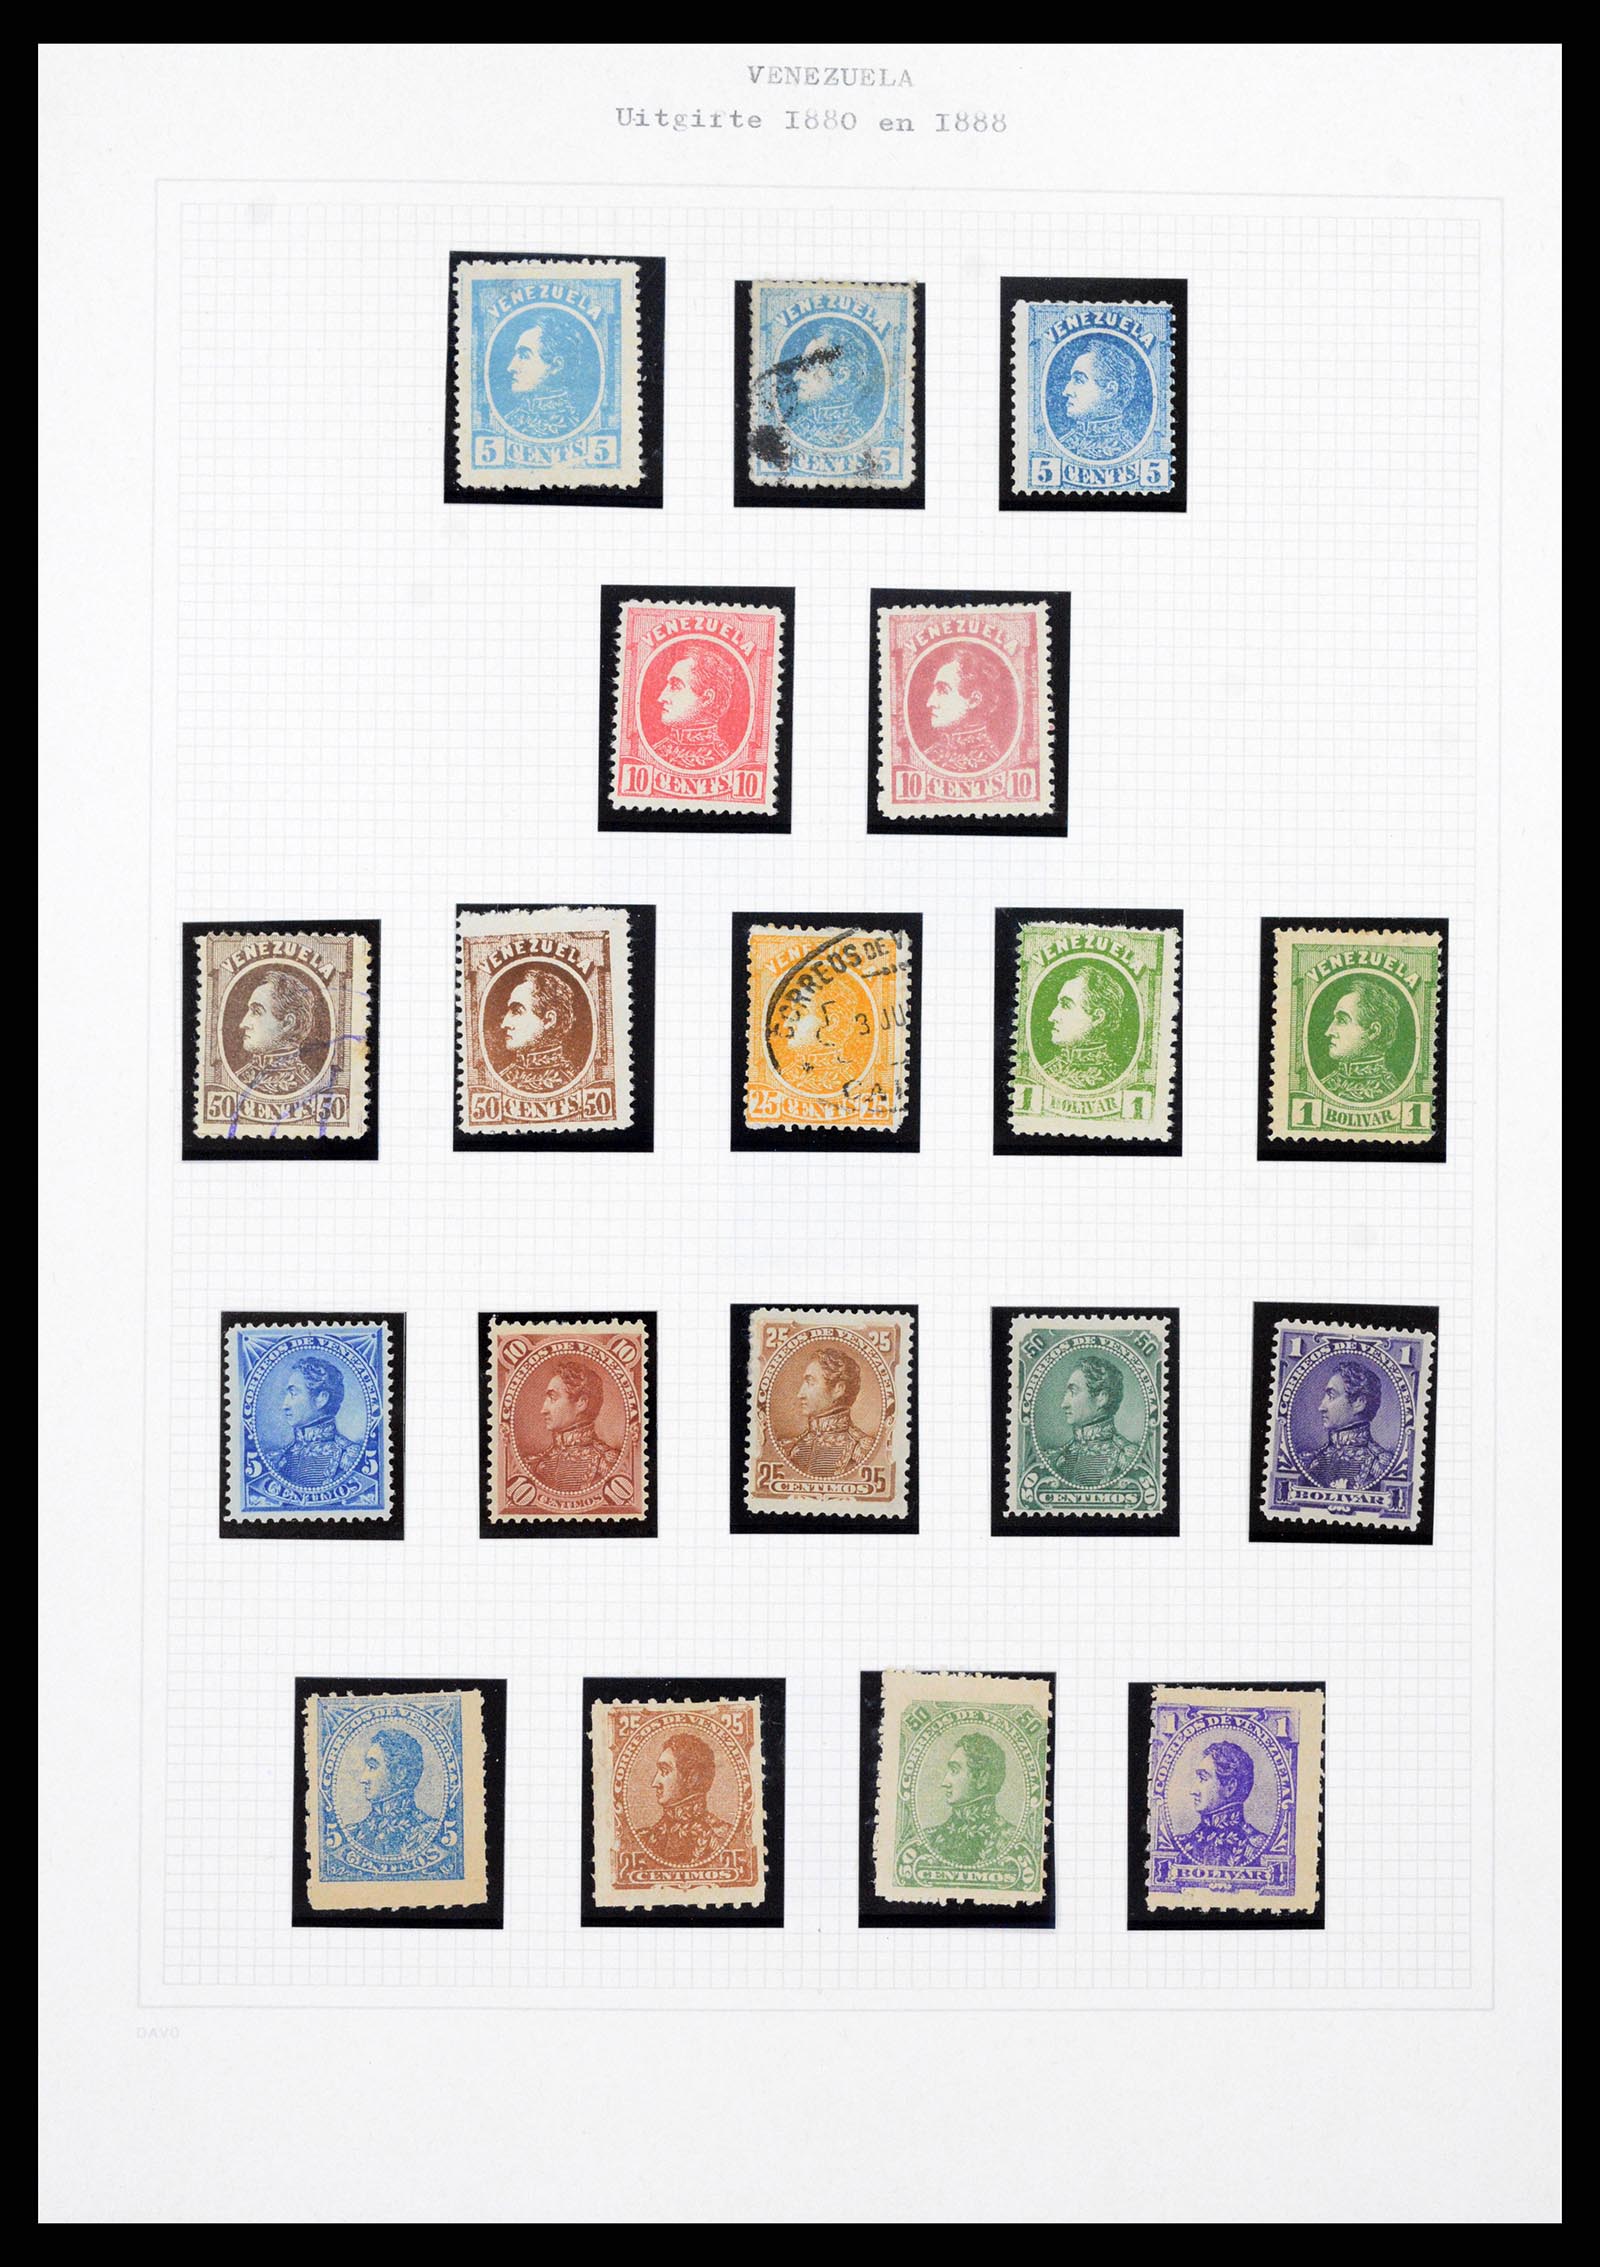 37353 001 - Stamp collection 37353 Venezuela 1880-1960.